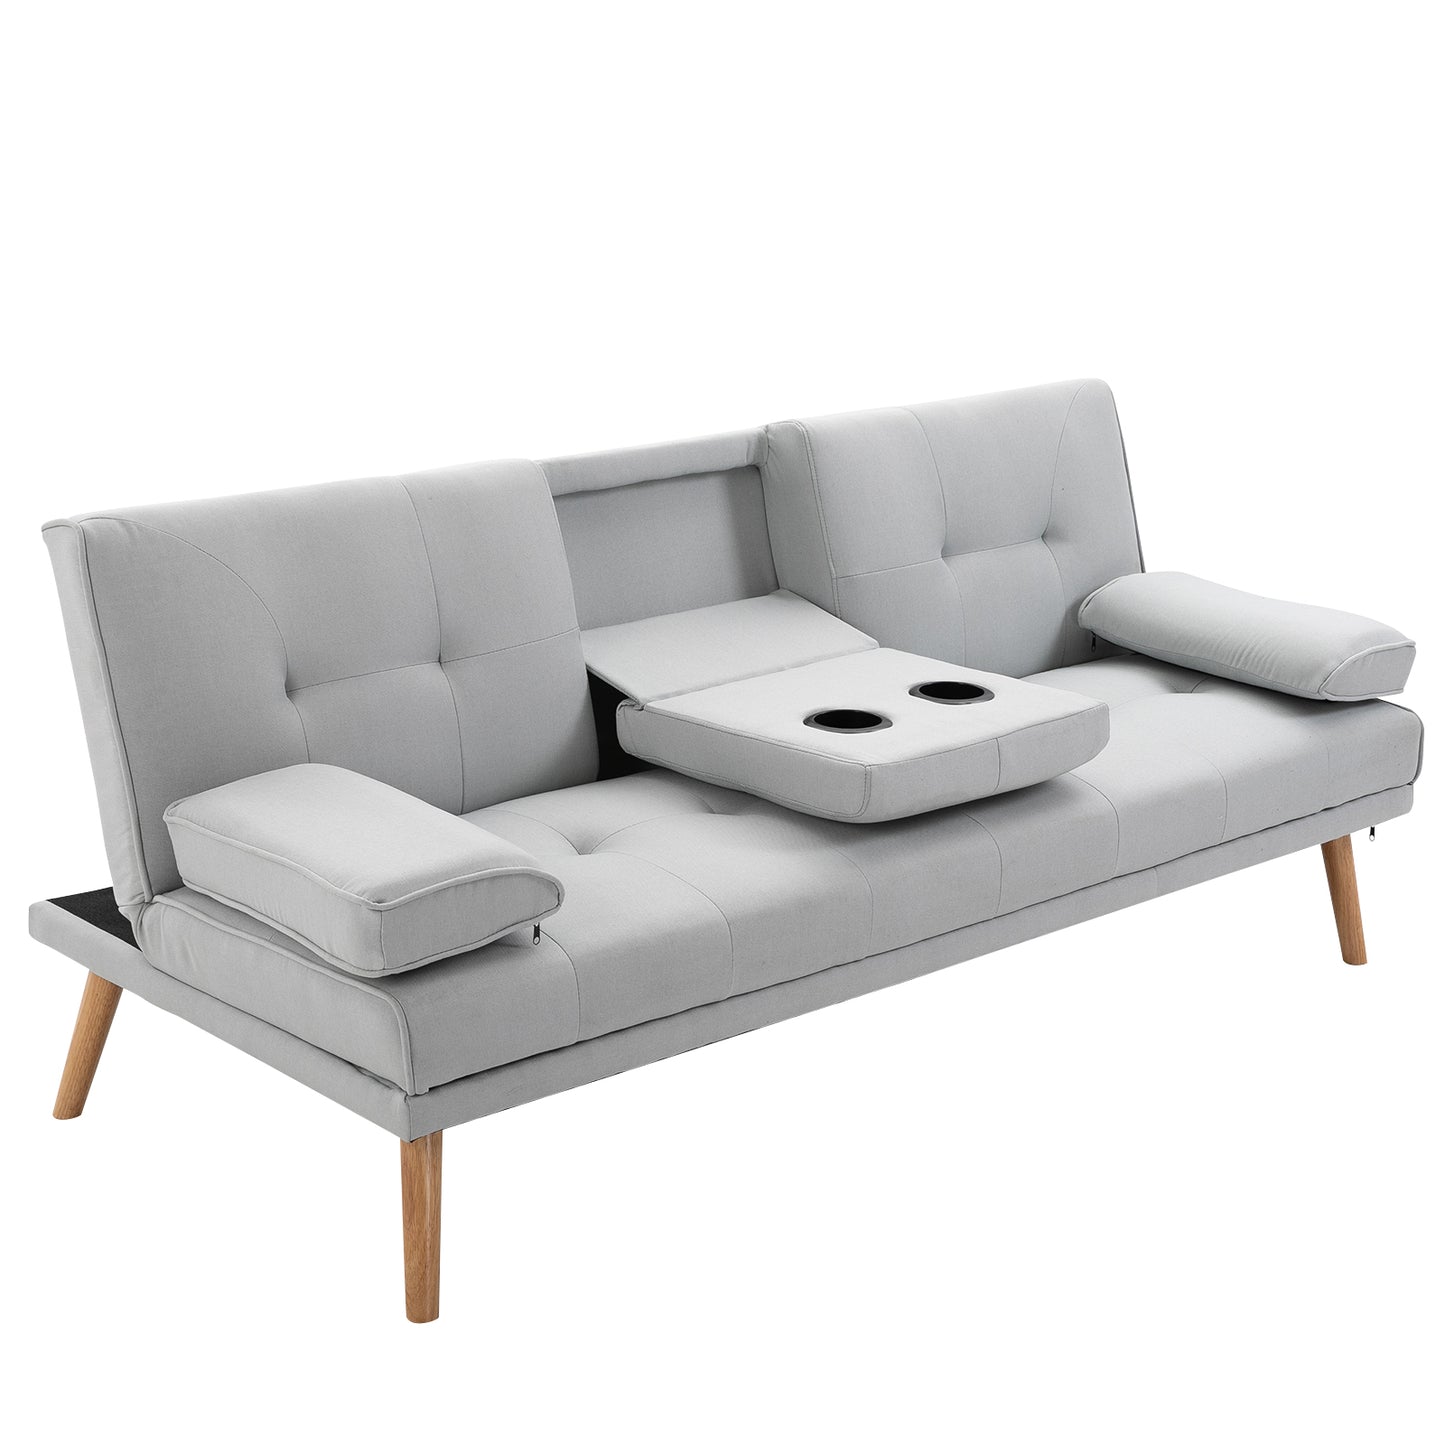 HOMCOM 3 Seater Sofa Bed W/Linen Metal Sponge Rubber Wood Legs, 181W x 77D x 72Hcm-Grey